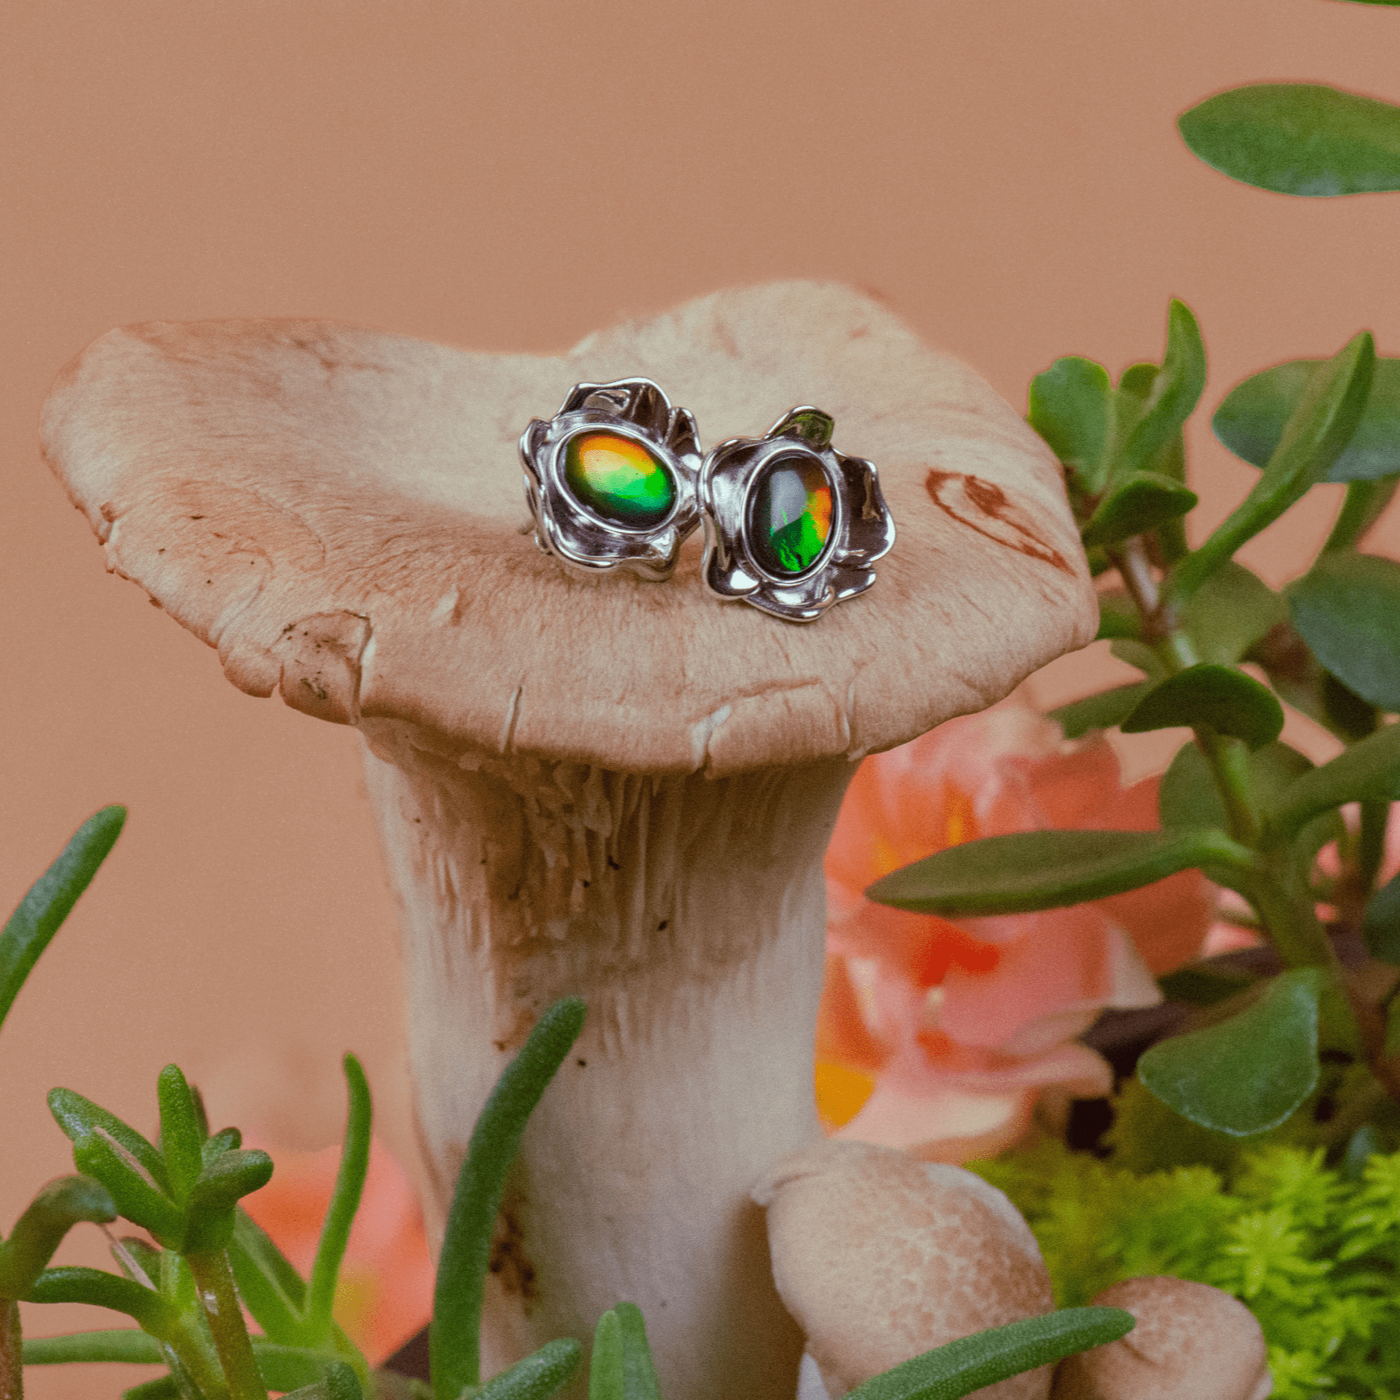 Bloom ammolite pendant, earring, ring and bracelet set in sterling silver